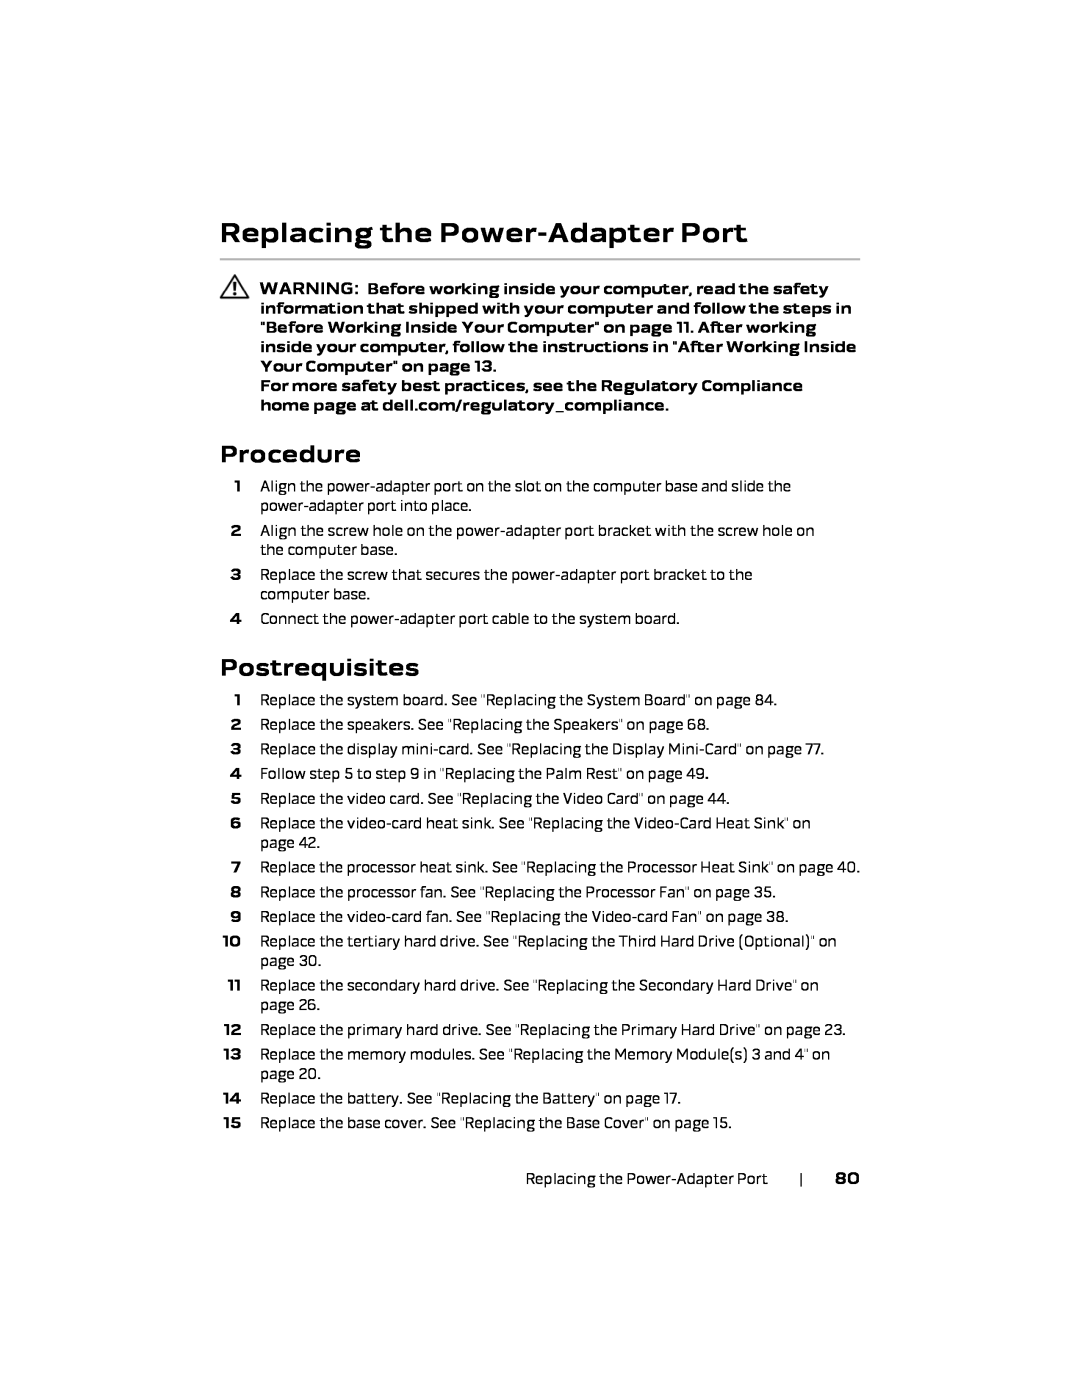 Alienware P18E, 17 R1 owner manual Replacing the Power-Adapter Port, Procedure, Postrequisites 